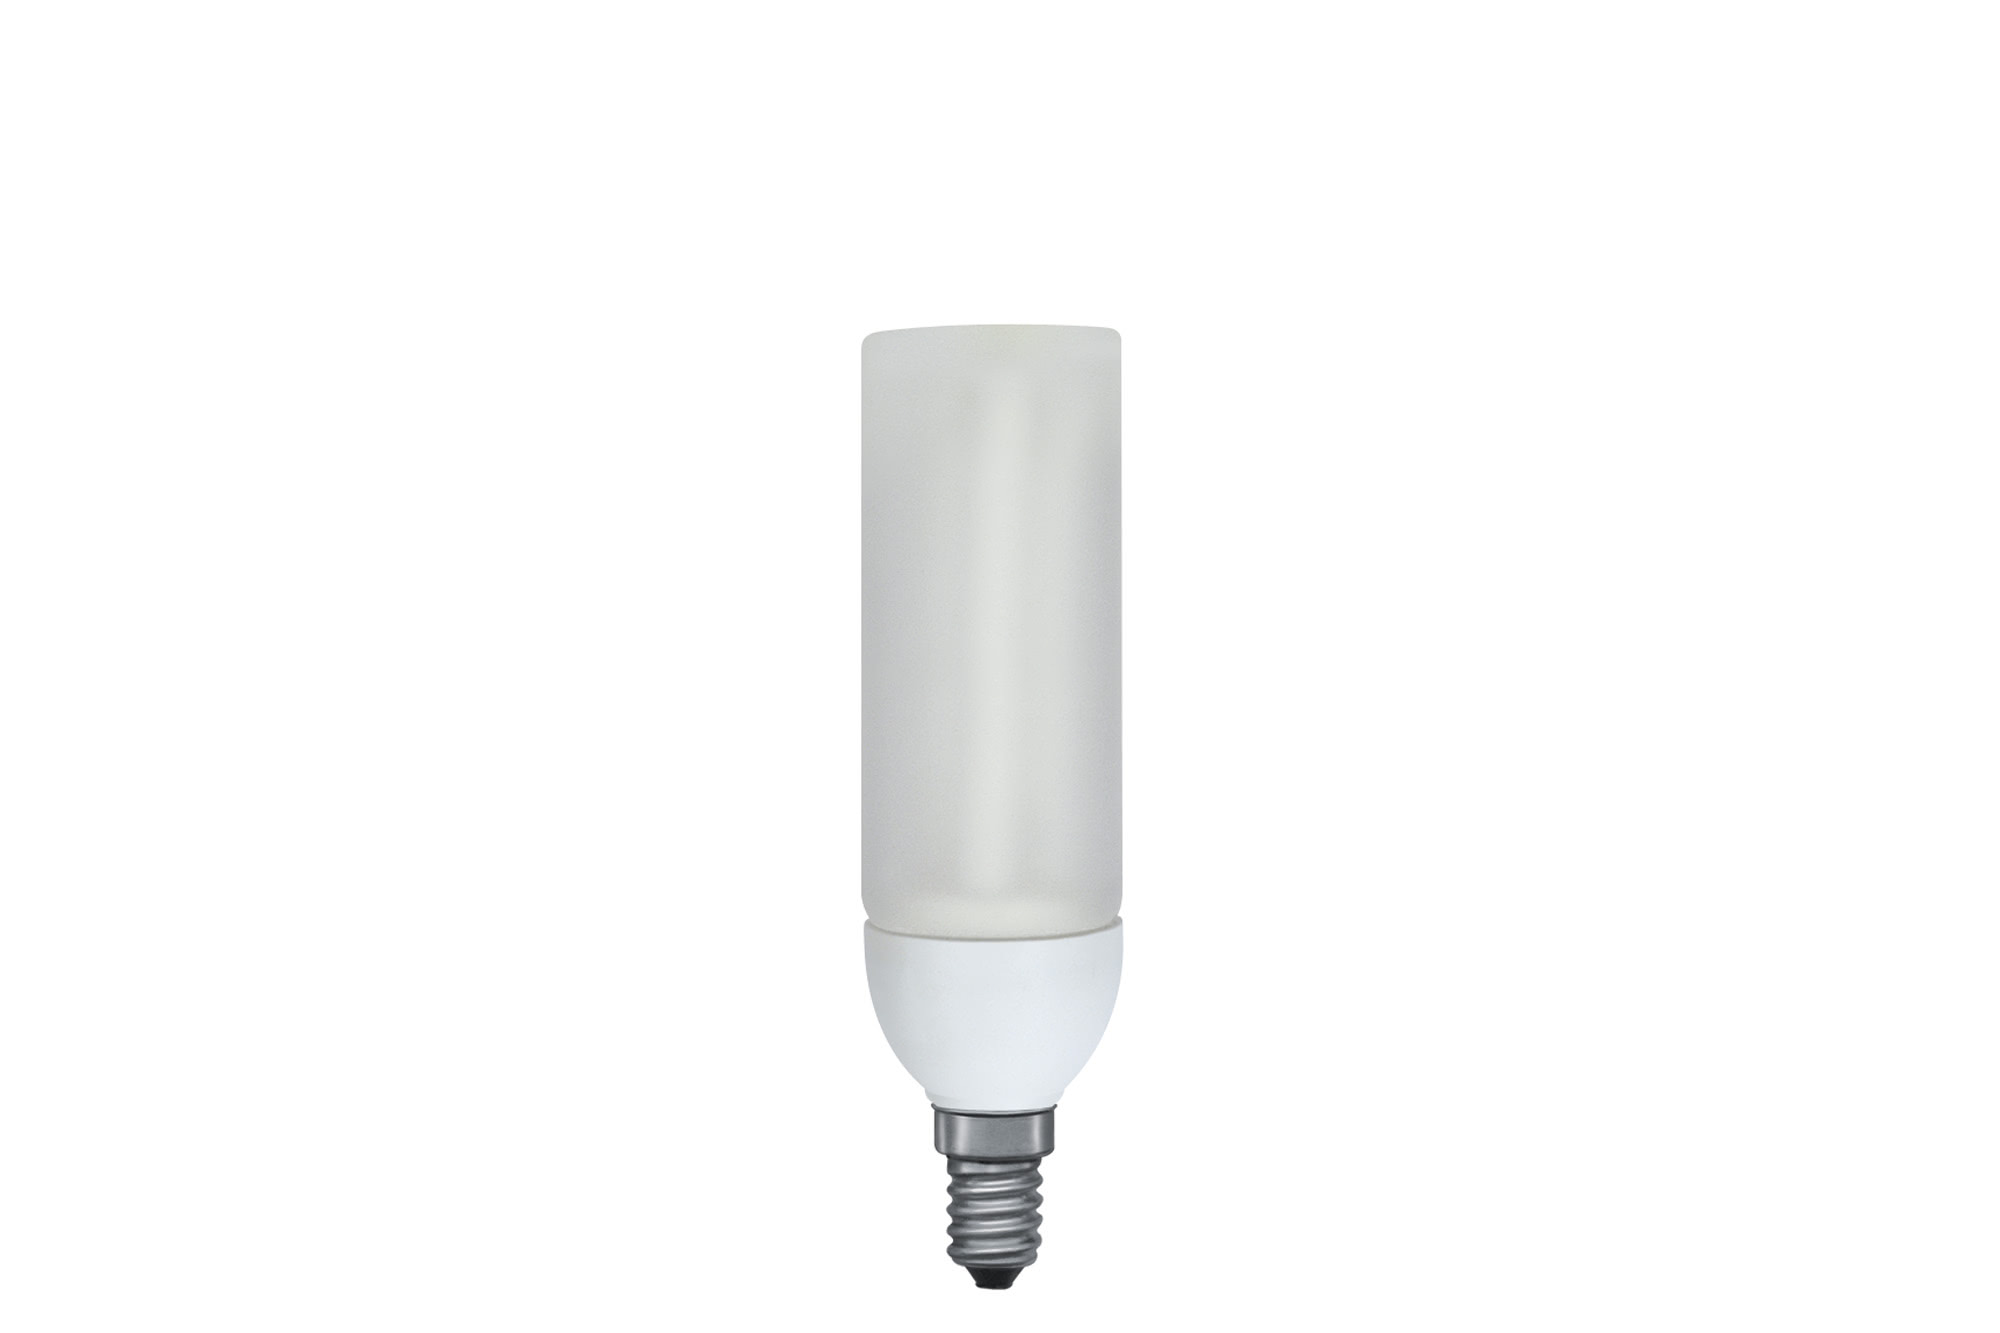 Paulmann. 89409 Лампа энергосберегающая, E14, 9W